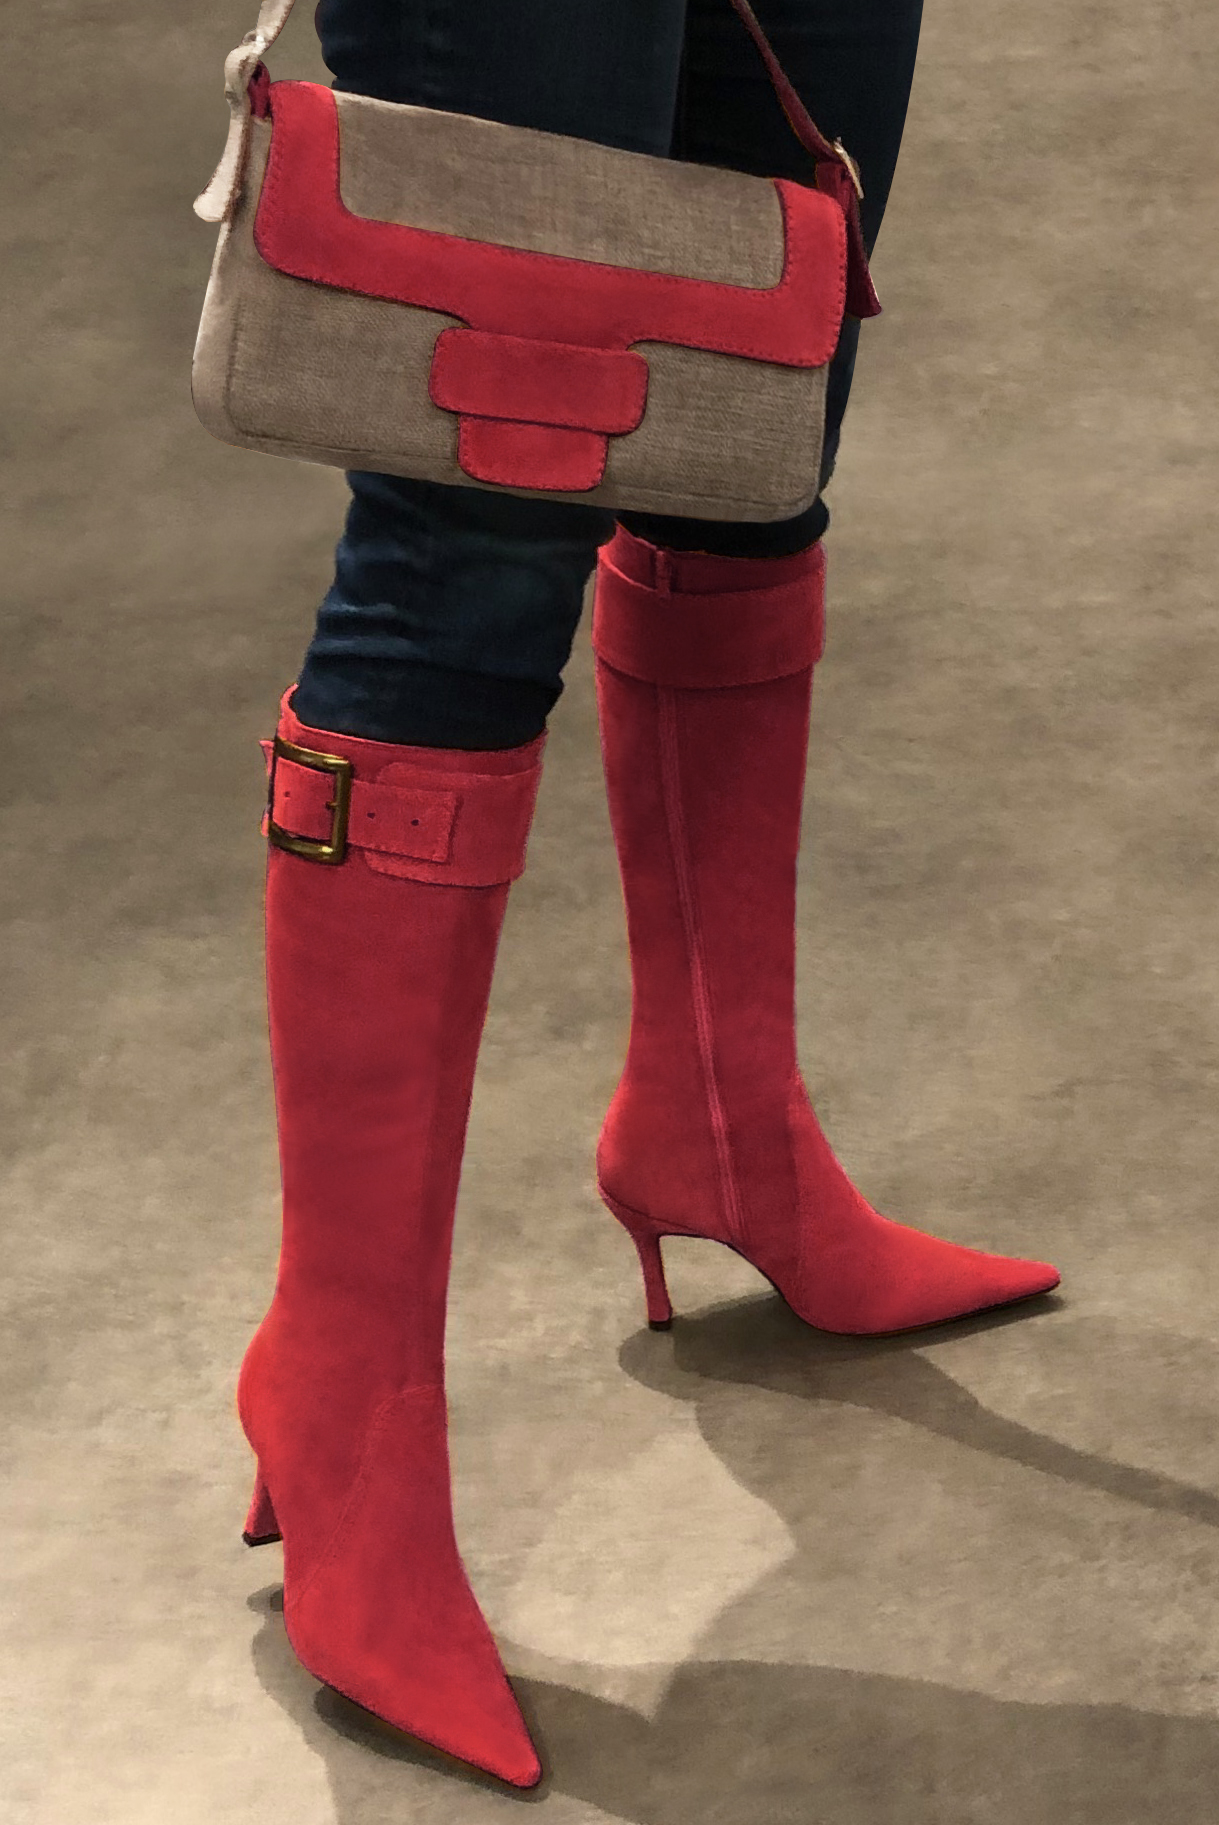 Scarlet red women's feminine knee-high boots. Pointed toe. Very high spool heels. Made to measure. Worn view - Florence KOOIJMAN